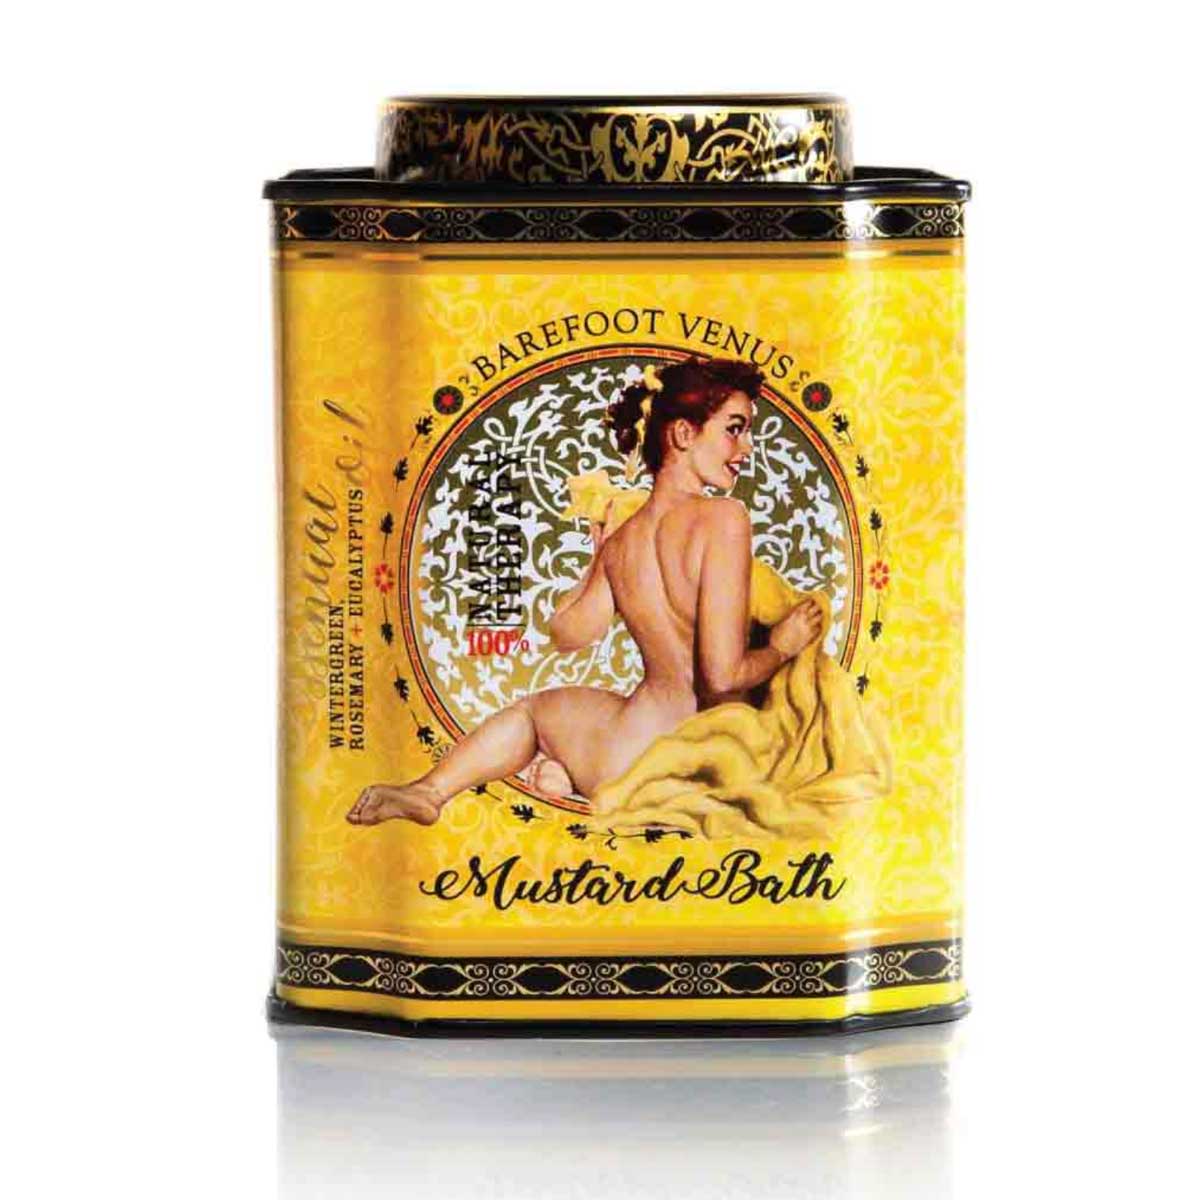 Mustard Bath Tin